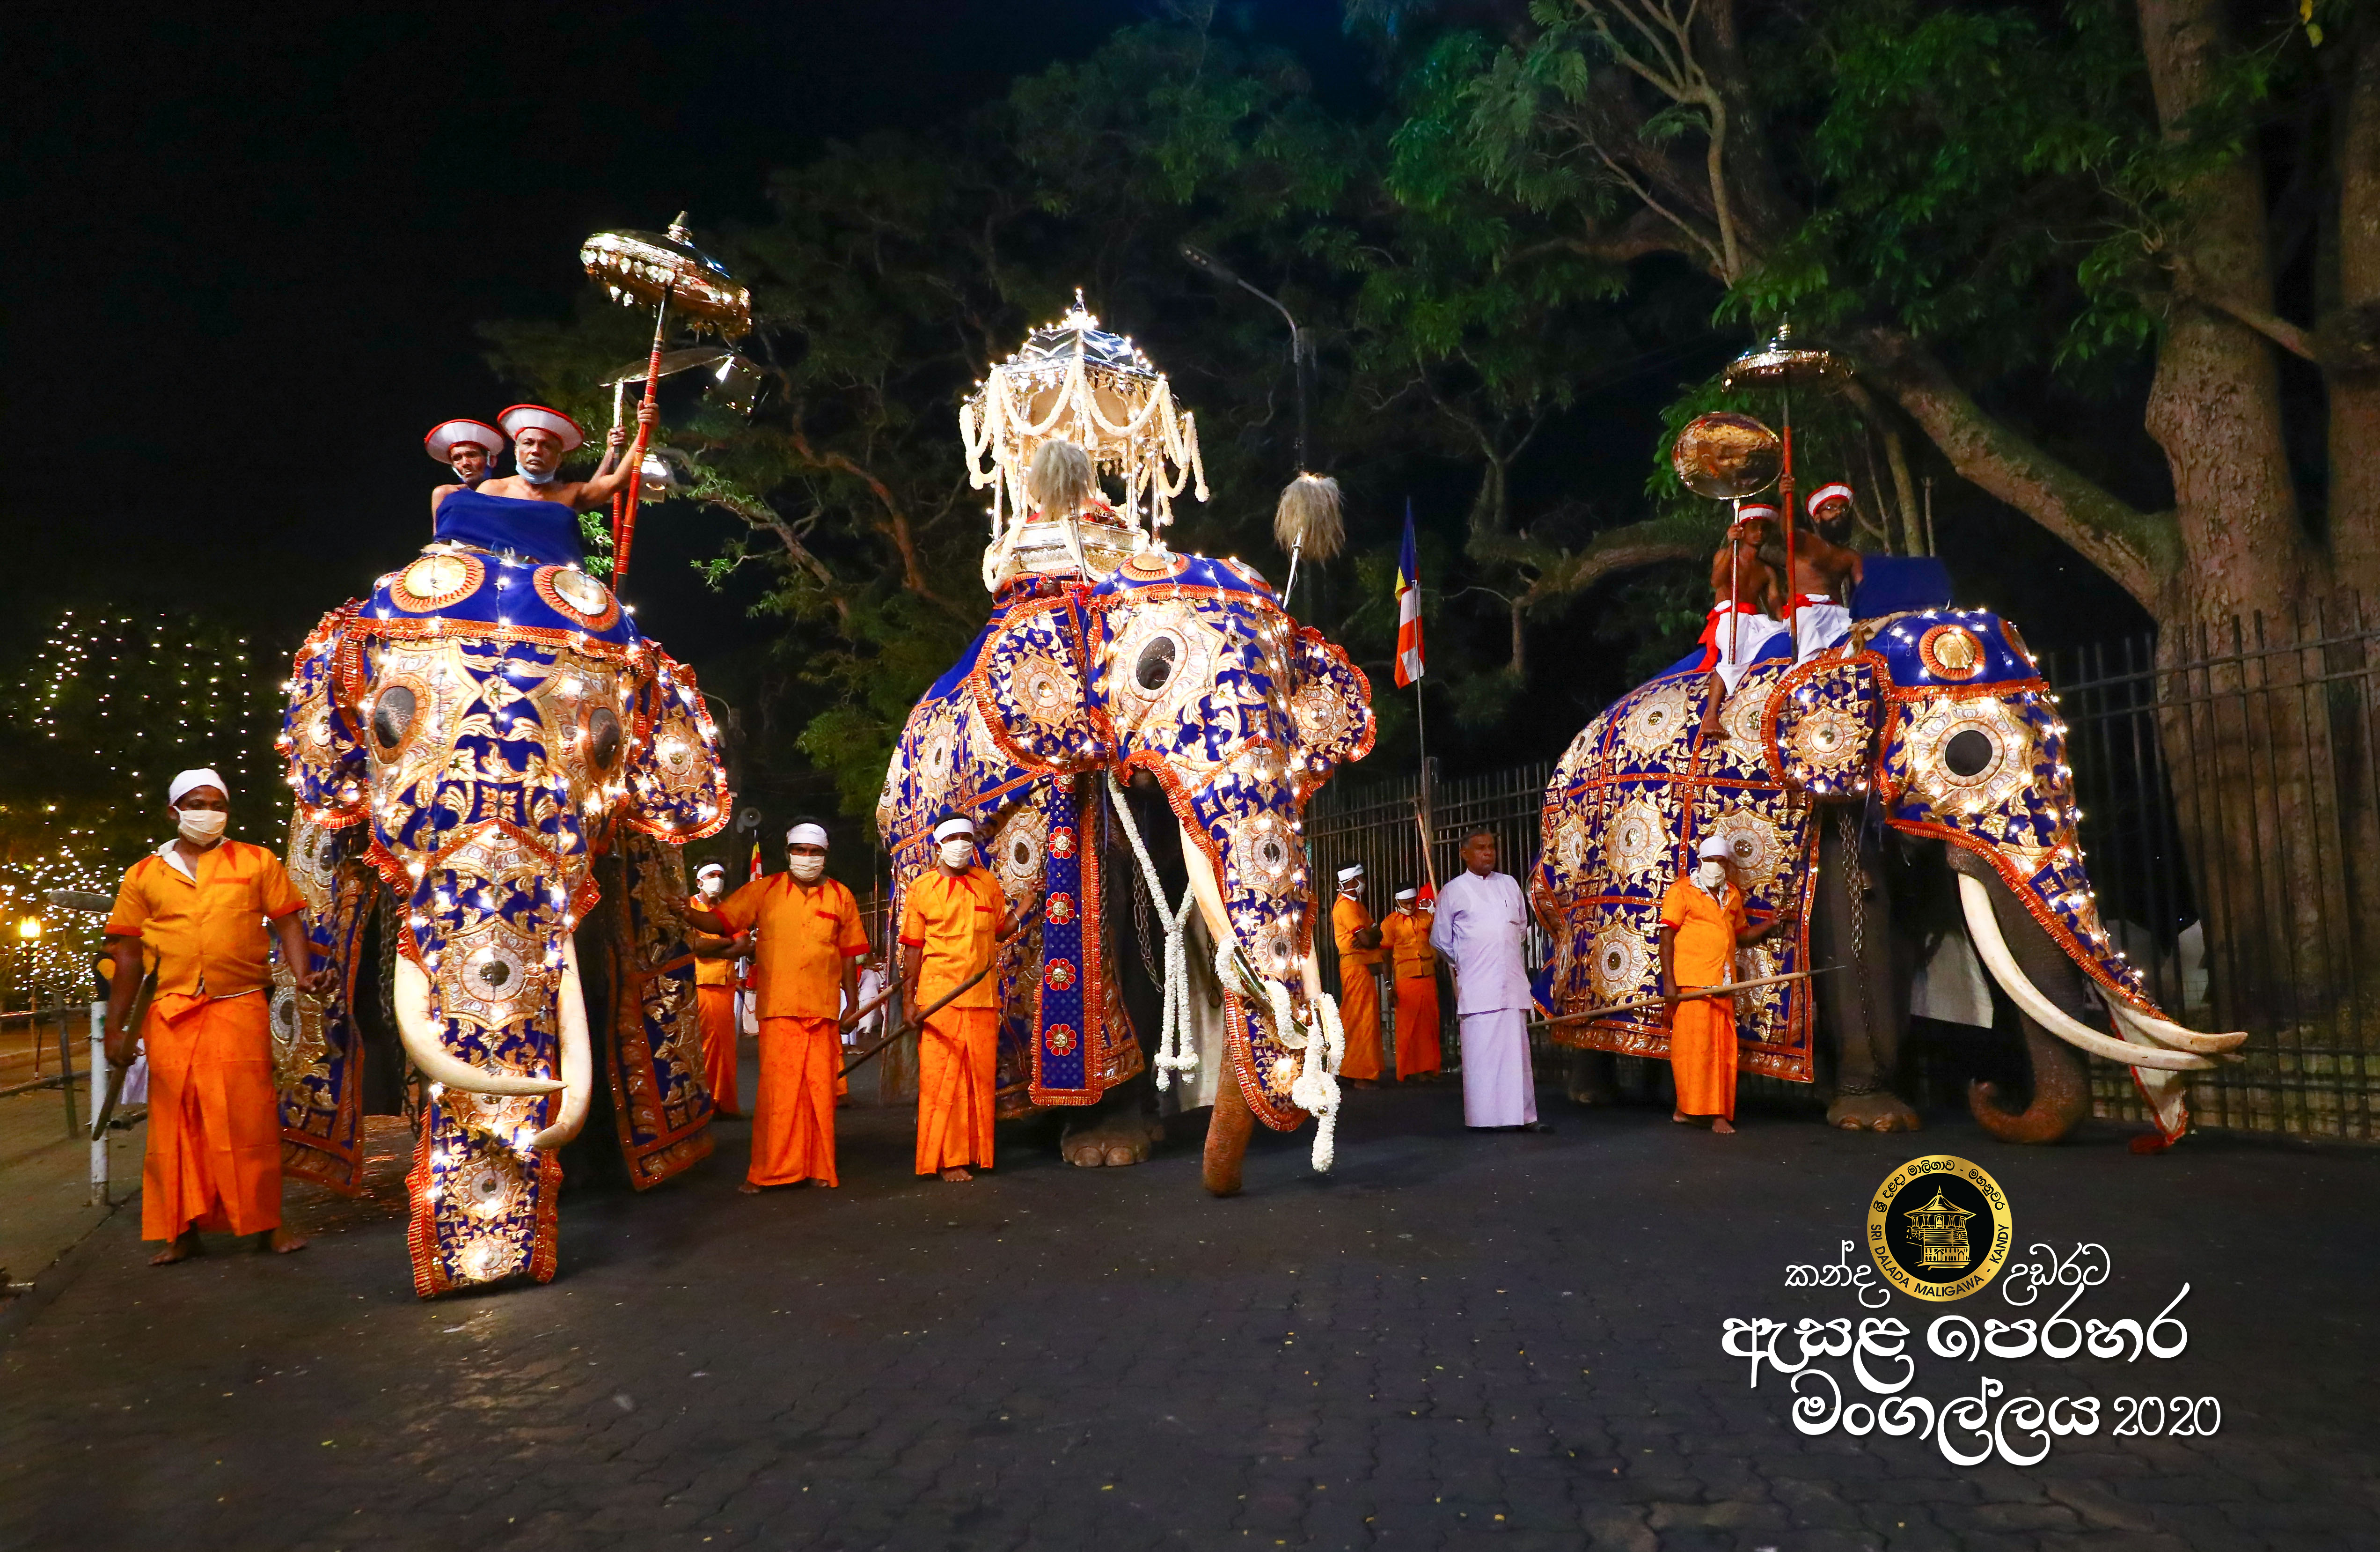 Kandy Esala Perahera festival begins August 21